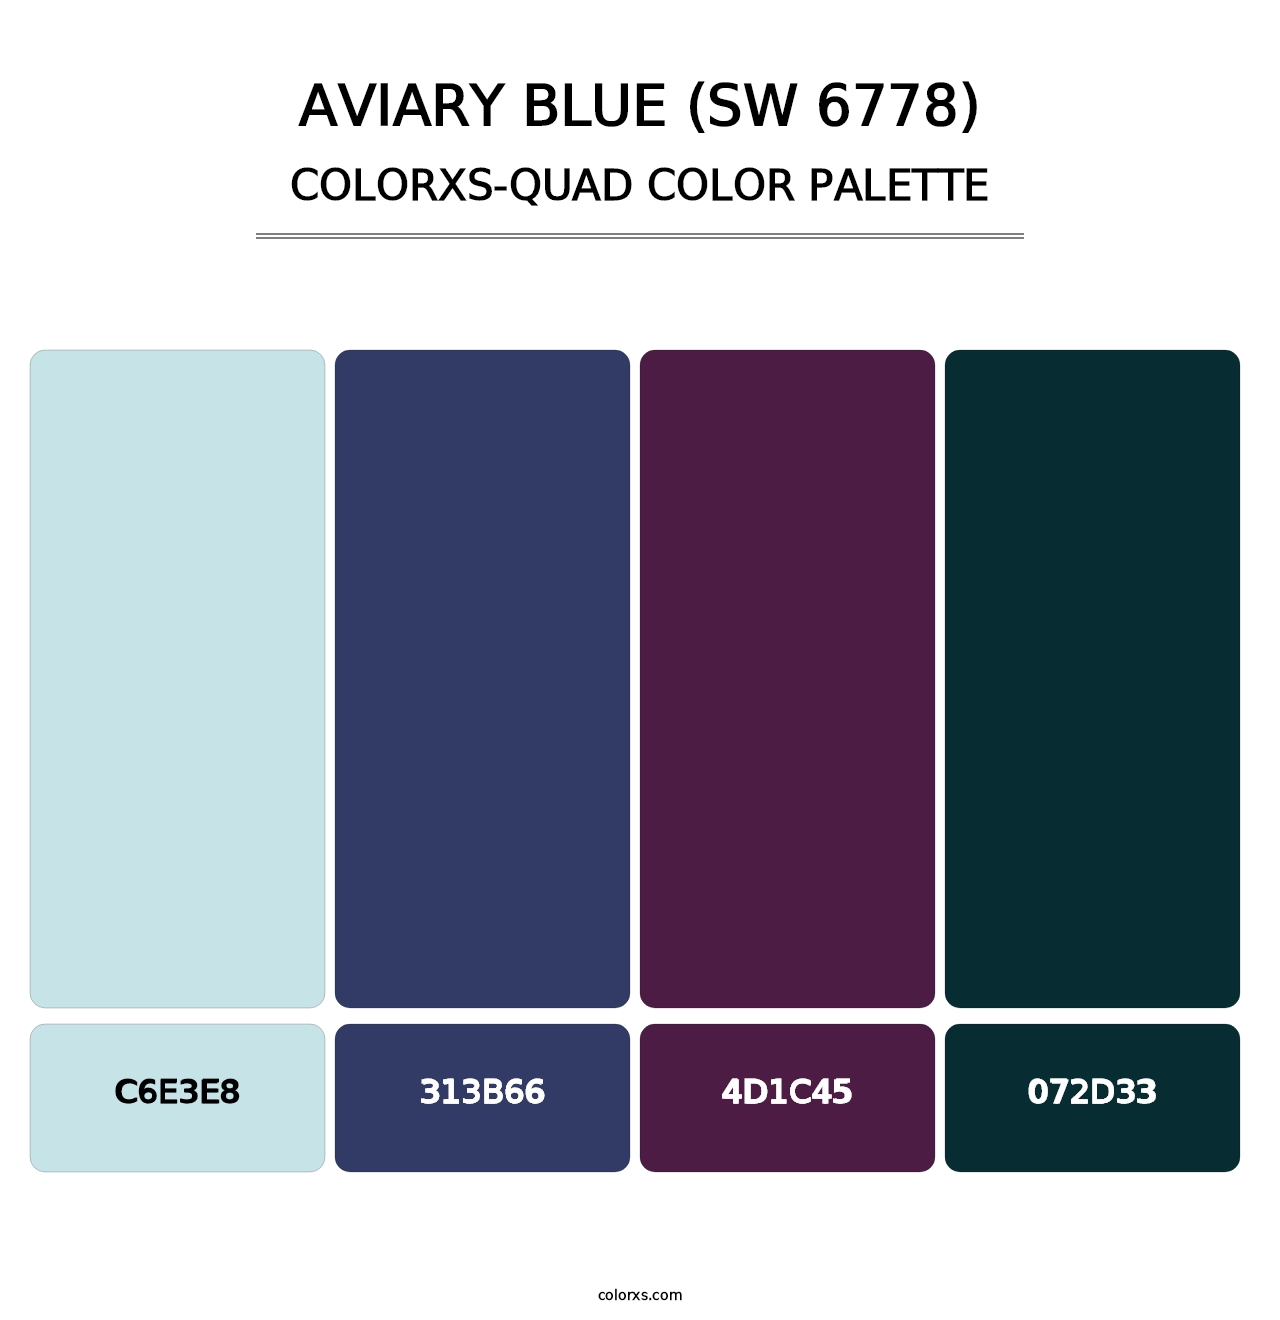 Aviary Blue (SW 6778) - Colorxs Quad Palette